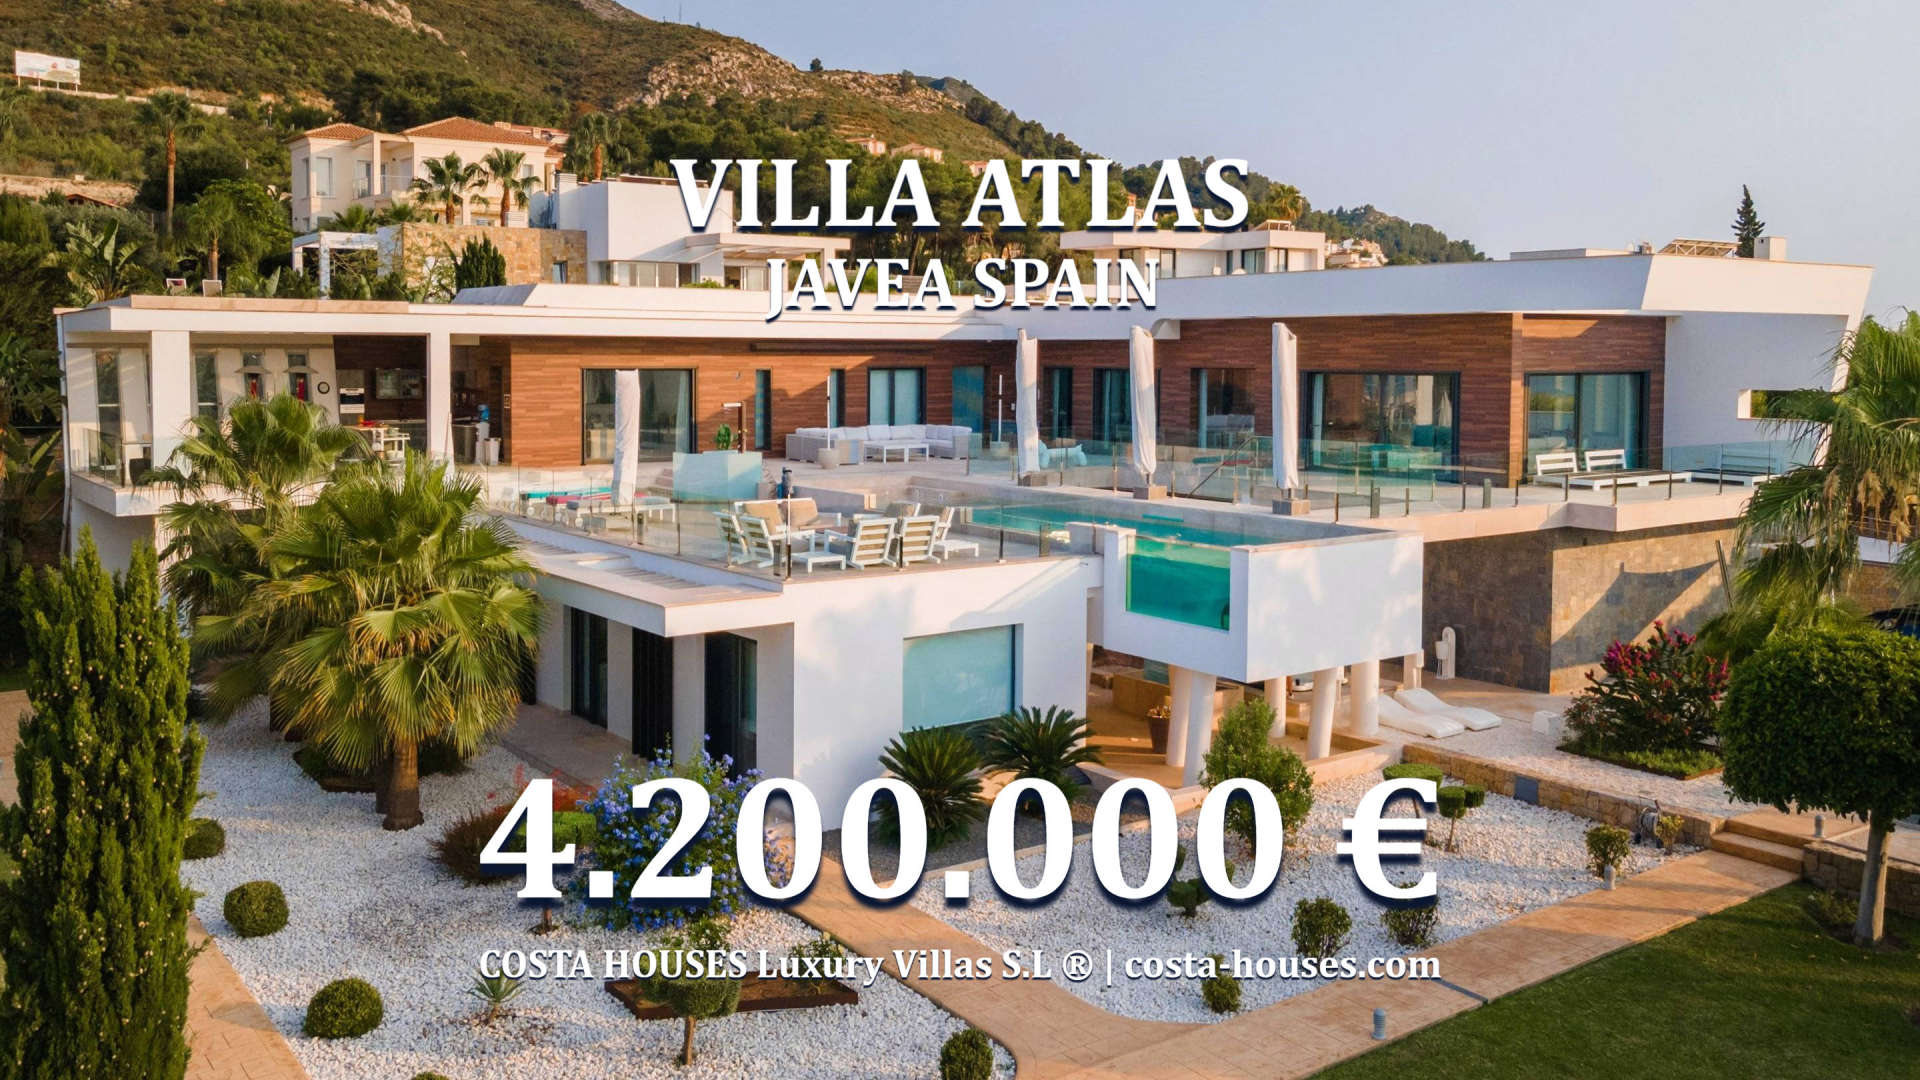 ᑕ❶ᑐ COSTA HOUSES LV S.L ® Luxury Realtor in COSTA BLANCA · www.costa-houses.com